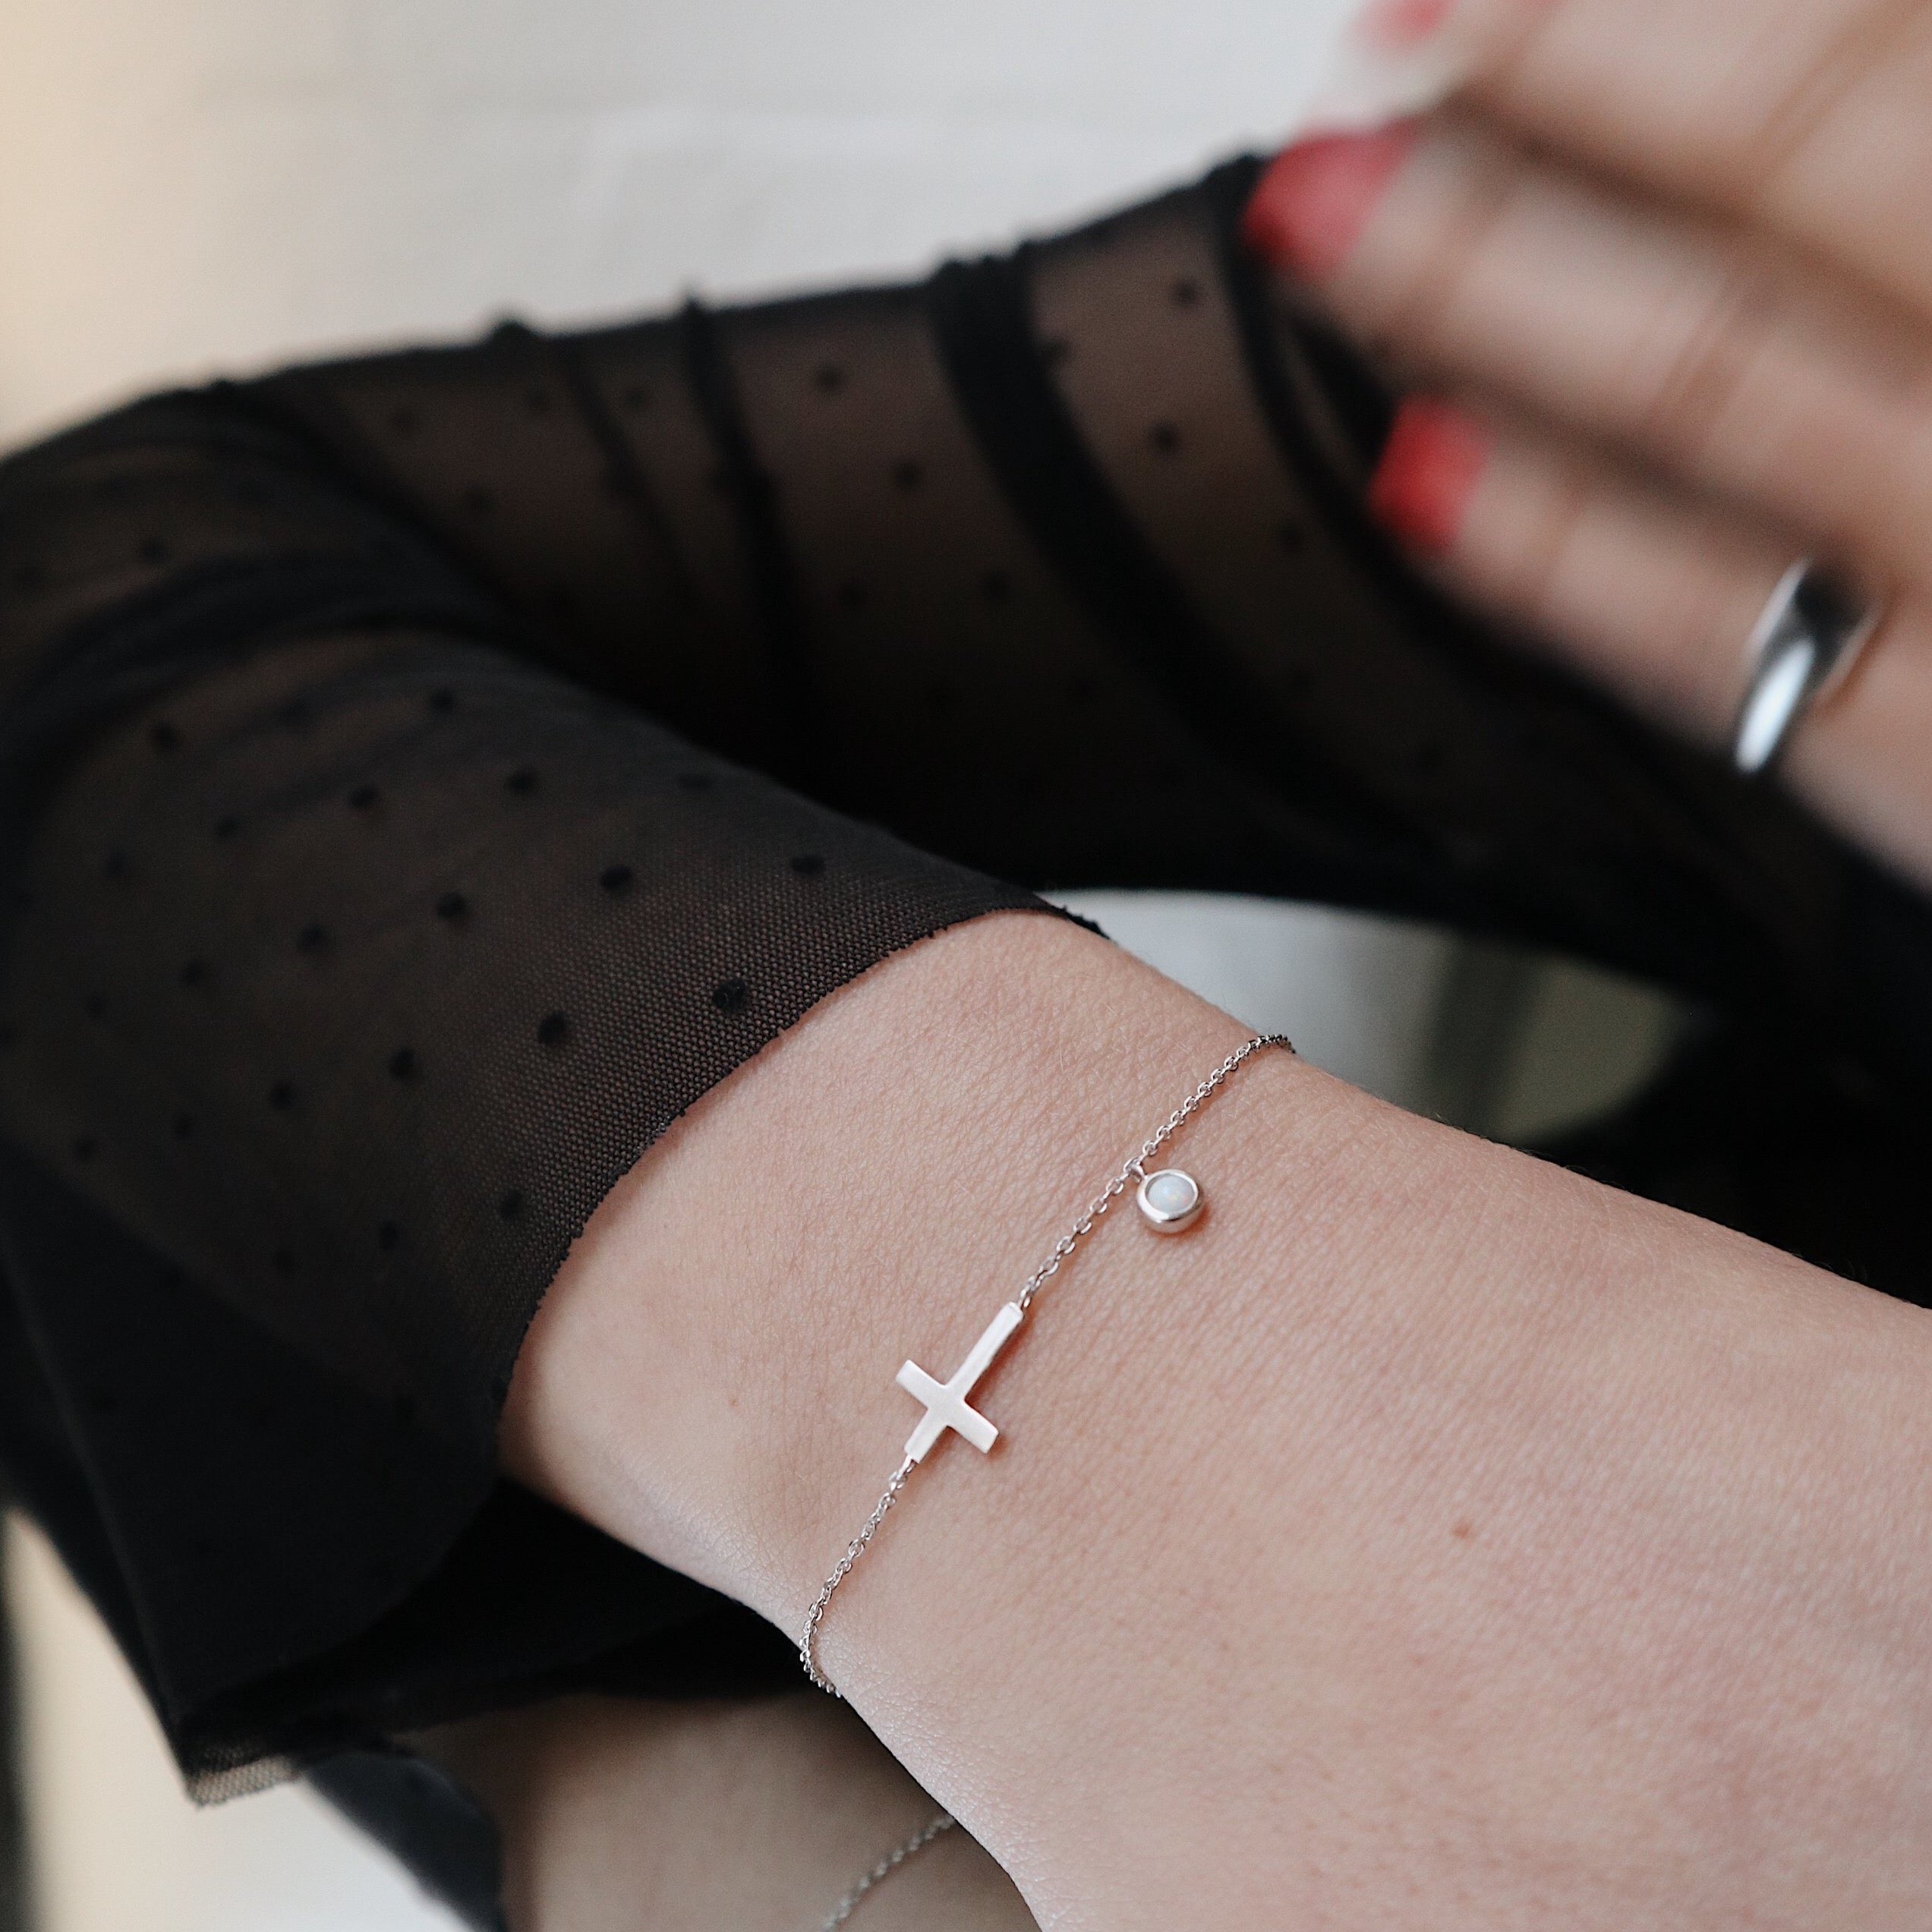 The Cross Chain Bracelet